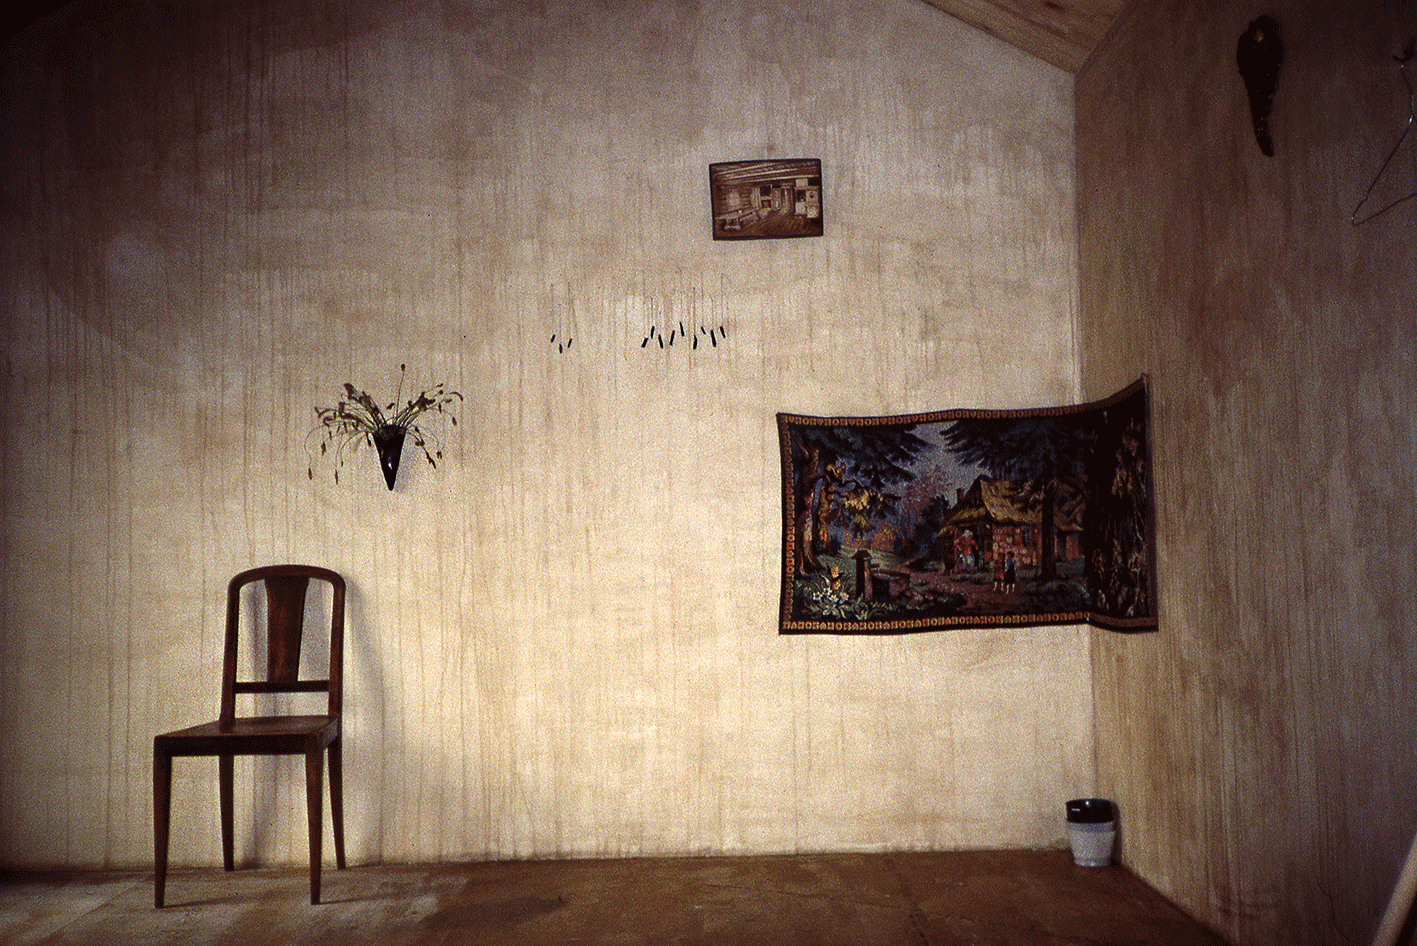 1995 Window Nr 7, Dialogues de Paix, United Nations, Geneva, Switzerland